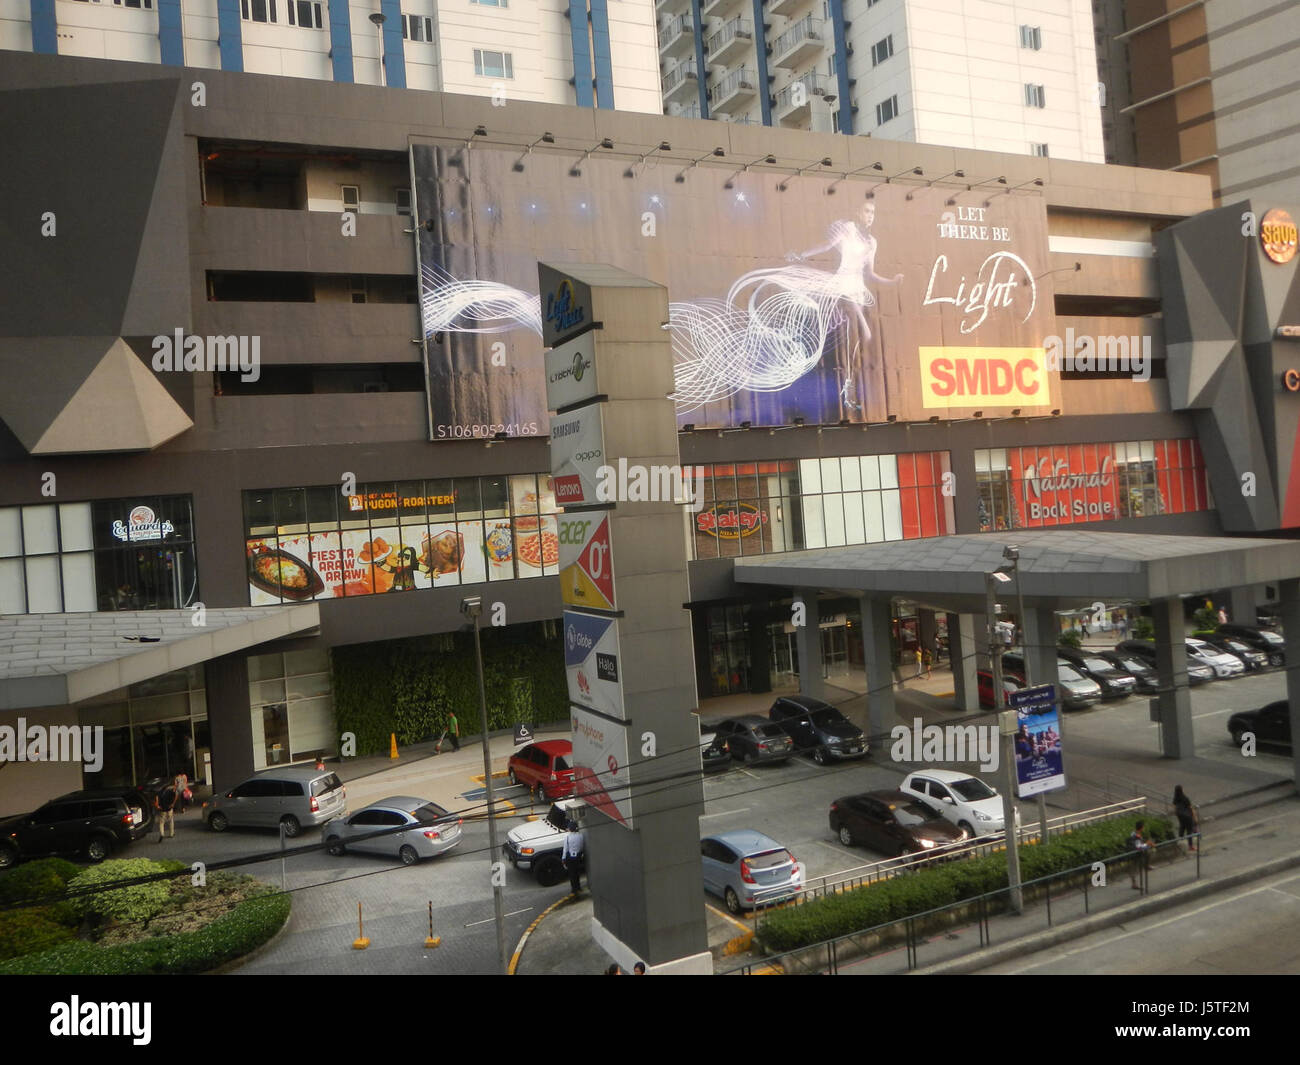 03591 Light Mall Light Residences SMDC EDSA Boni Pioneer Mandaluyong City Stock Photo -